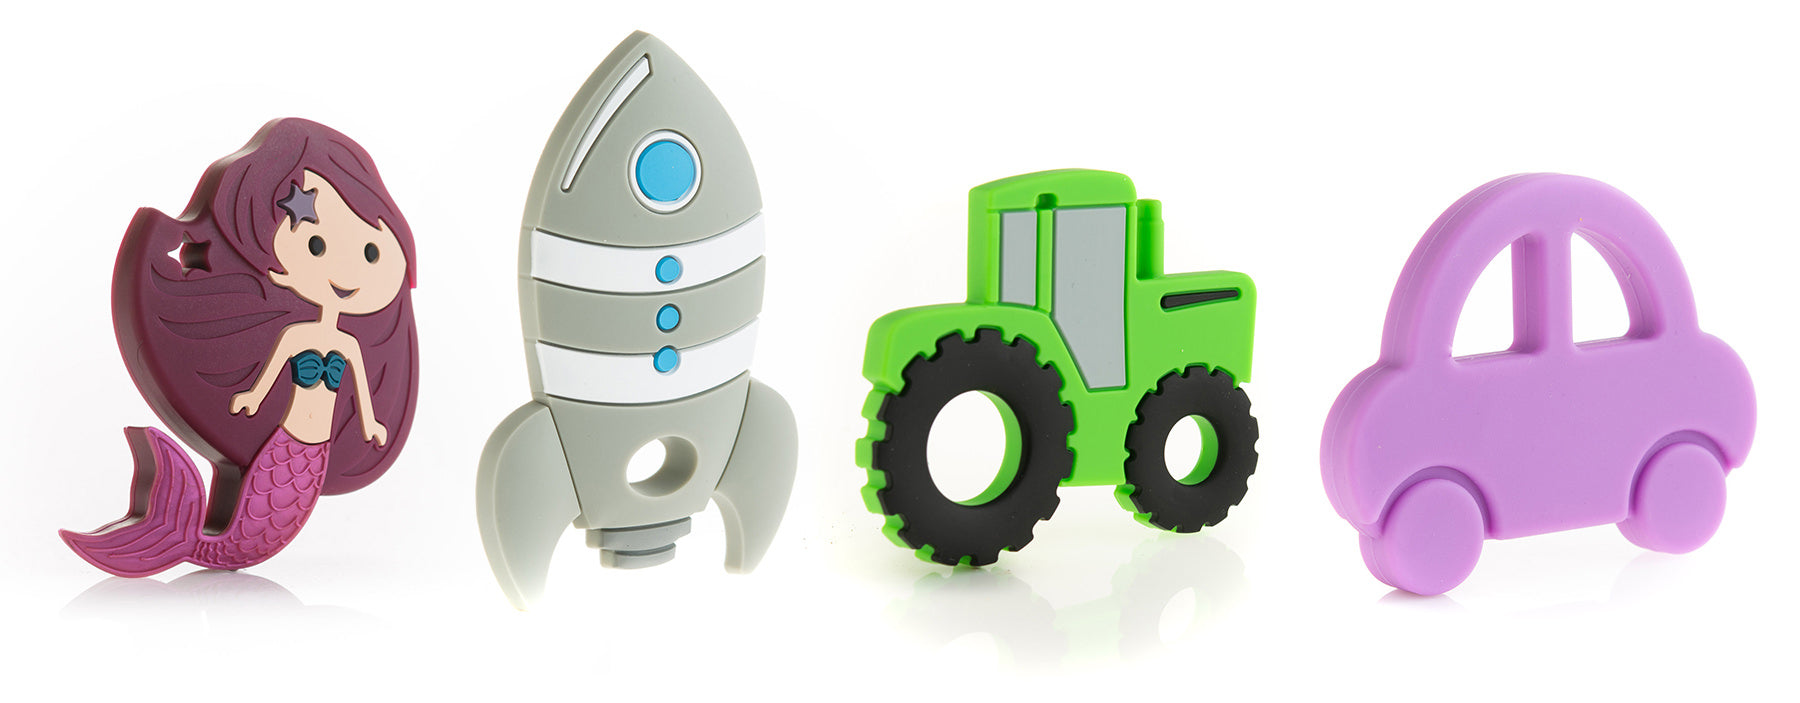 DIY Sensory bins for play based learning - Cara & Co blog posts